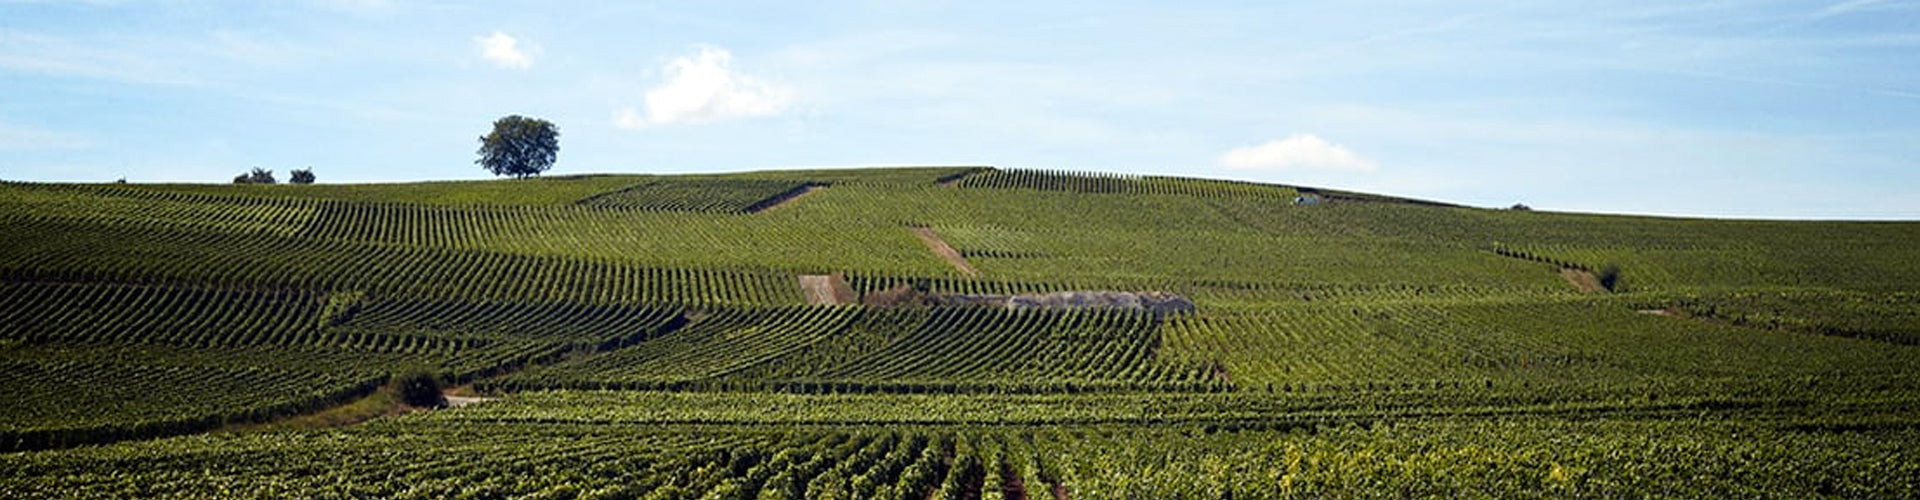 Champagne Piper-Heidsieck Vineyards near Reims